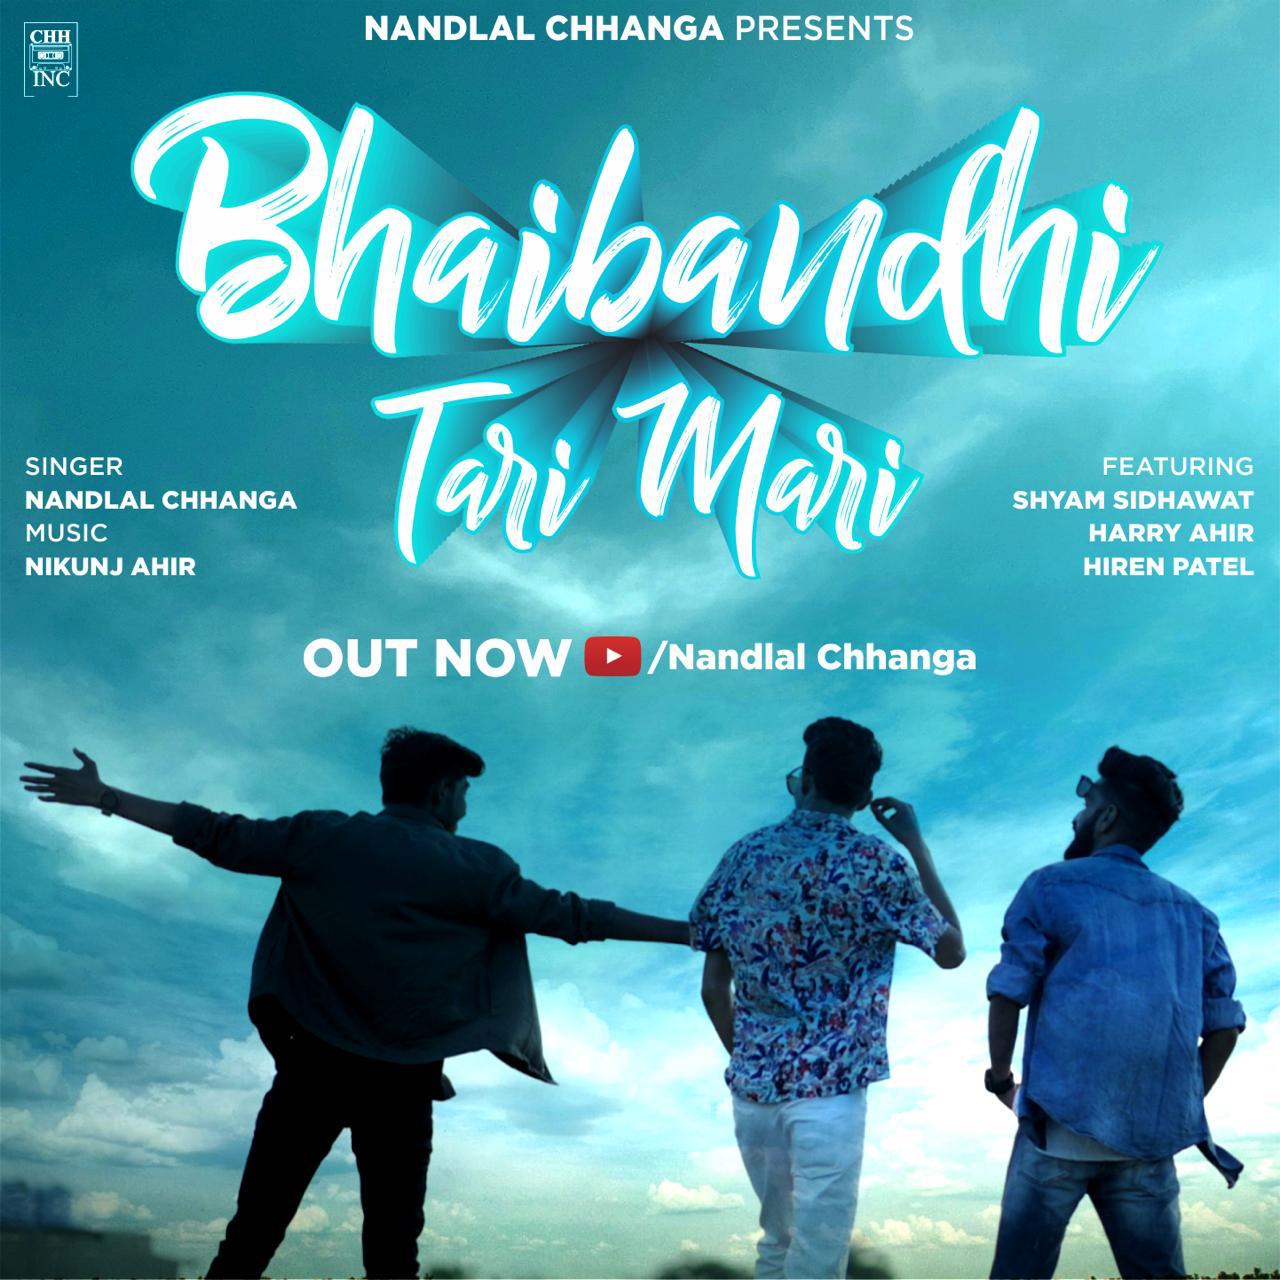 Nandlal Chhanga’s friendship anthem titled Bhaibandhi Tari Mari out now!